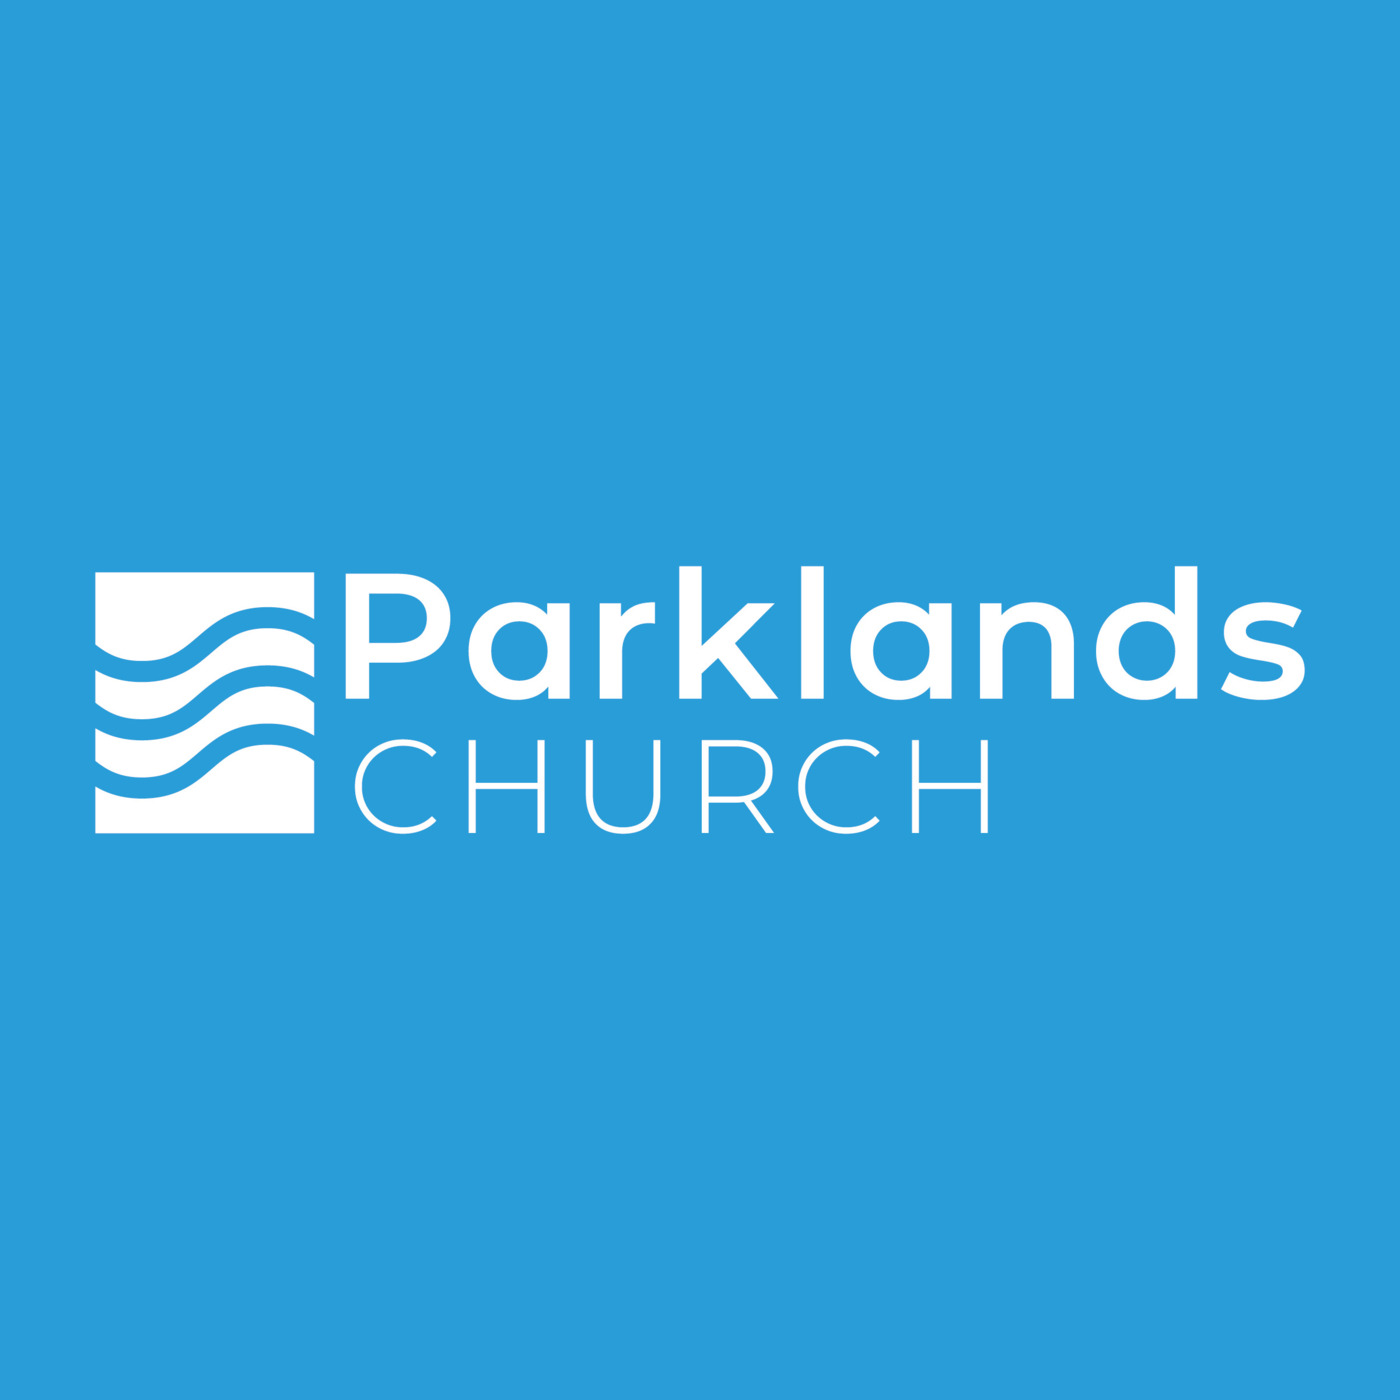 Parklands Church